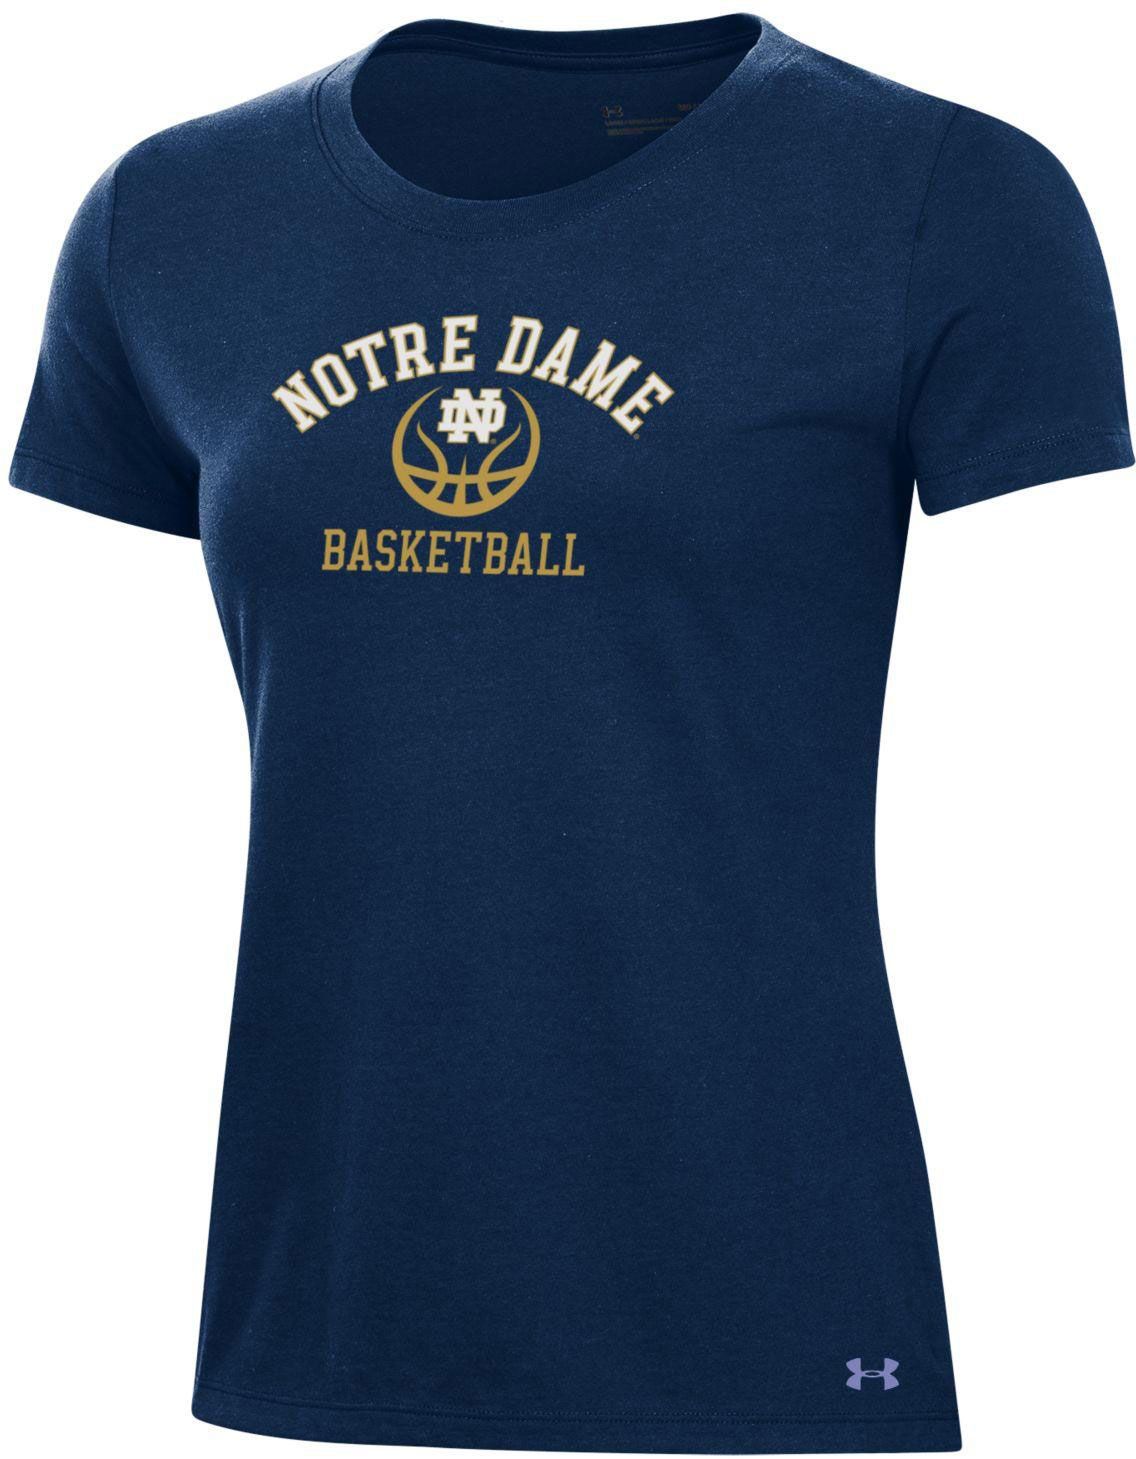 Under Armour Women's Notre Dame Fighting Irish Basketball Navy T-Shirt